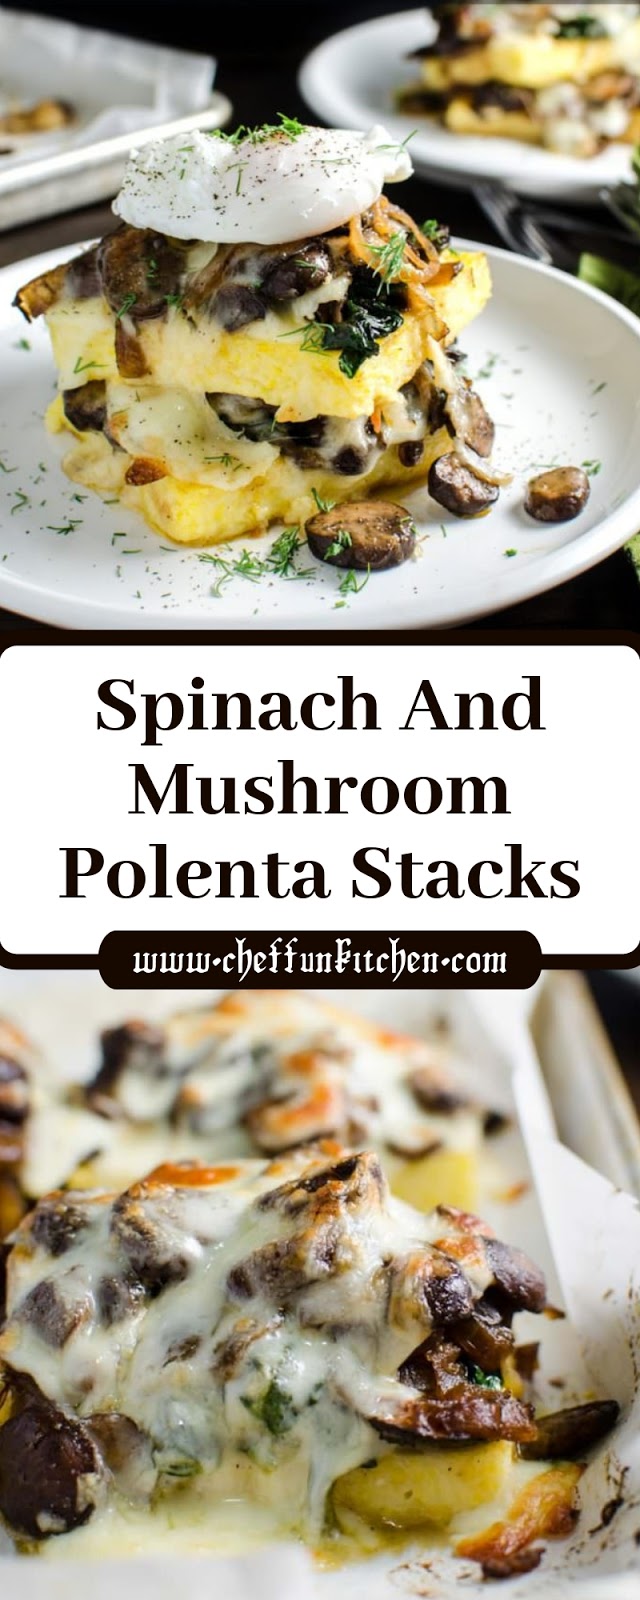 Spinach And Mushroom Polenta Stacks